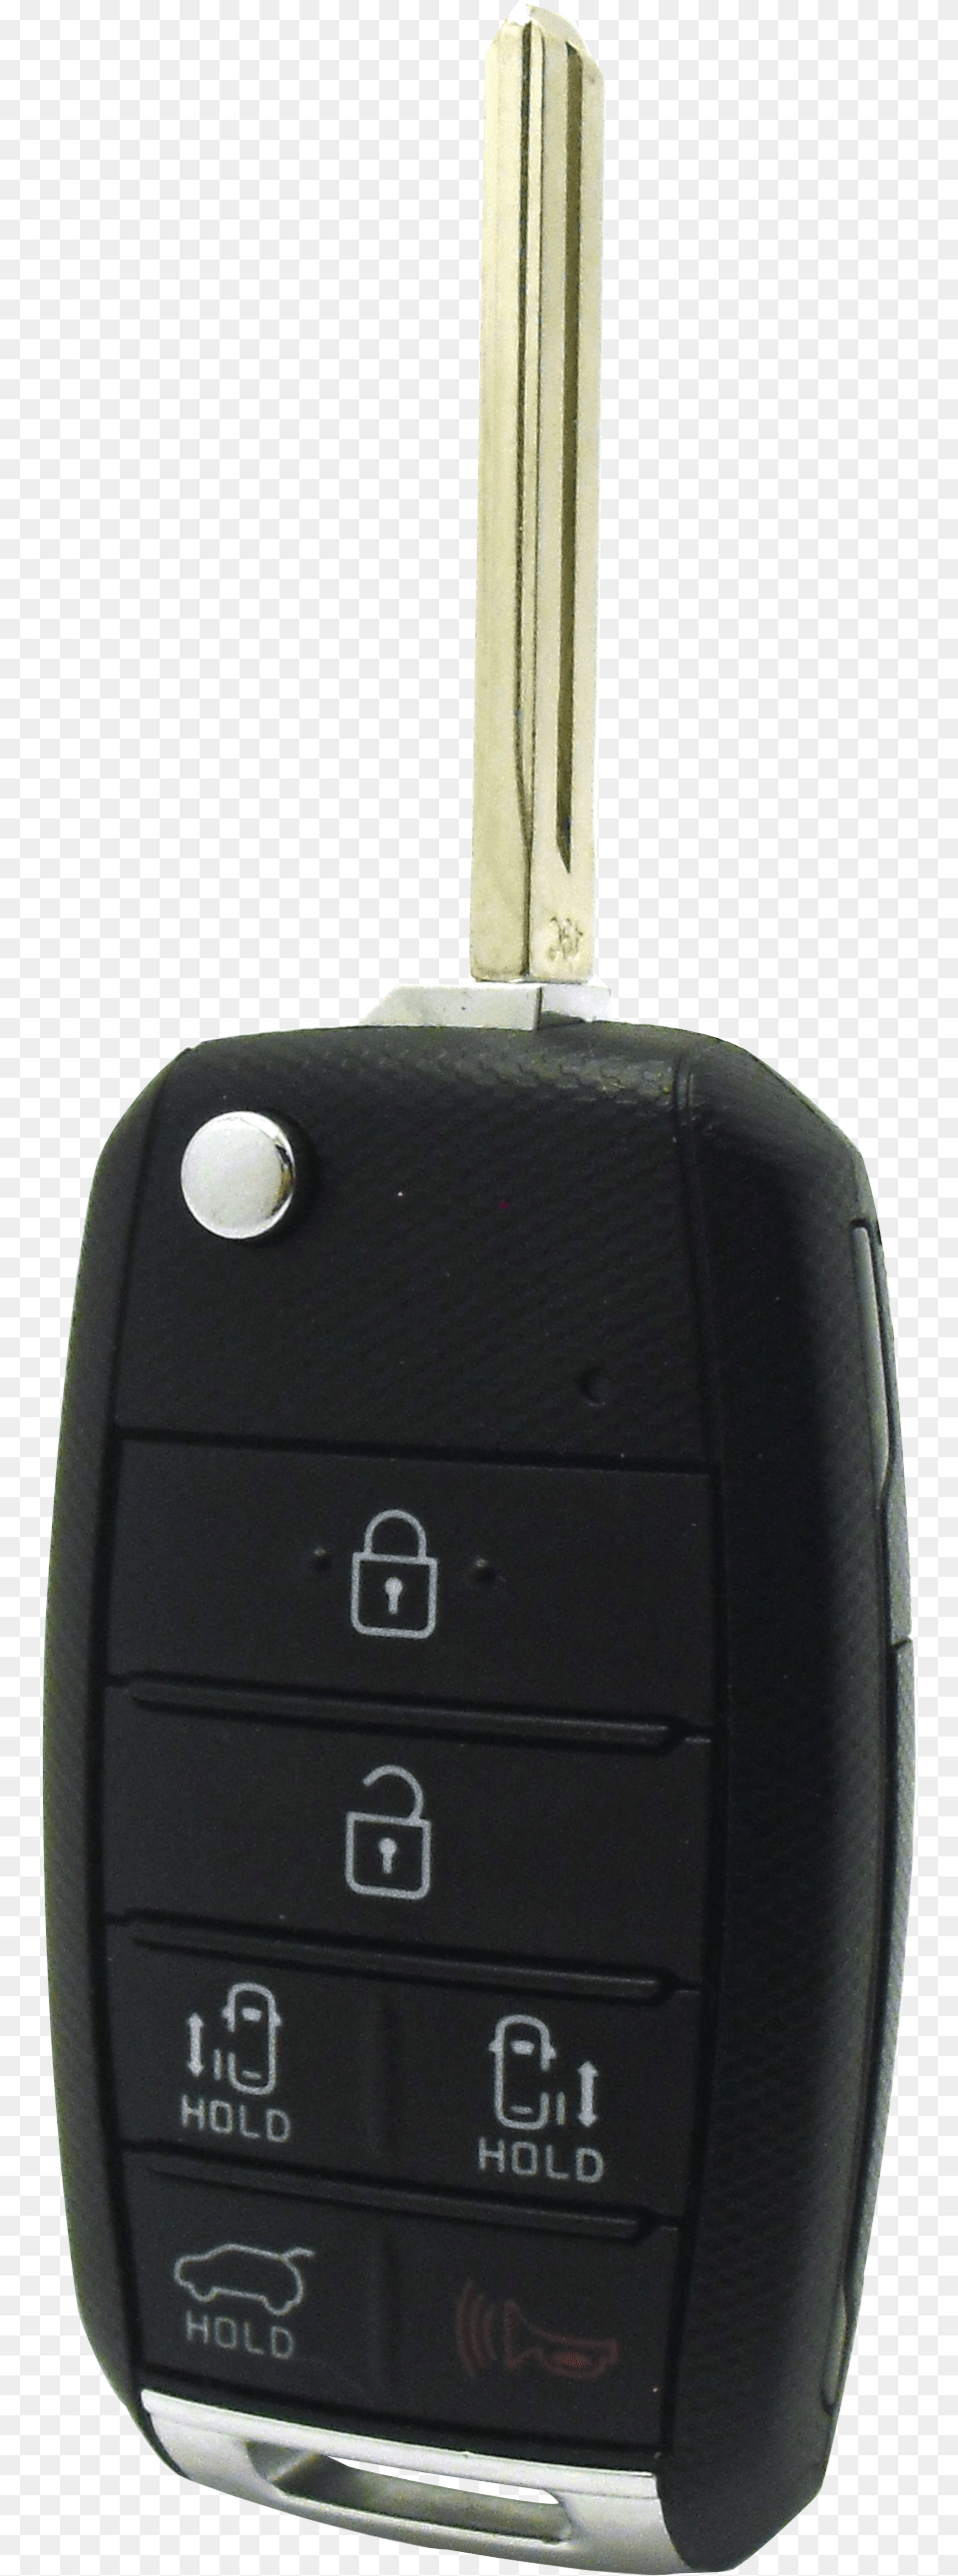 Keyless Entry And Flip Key Hand Luggage, Electronics, Mobile Phone, Phone Free Png